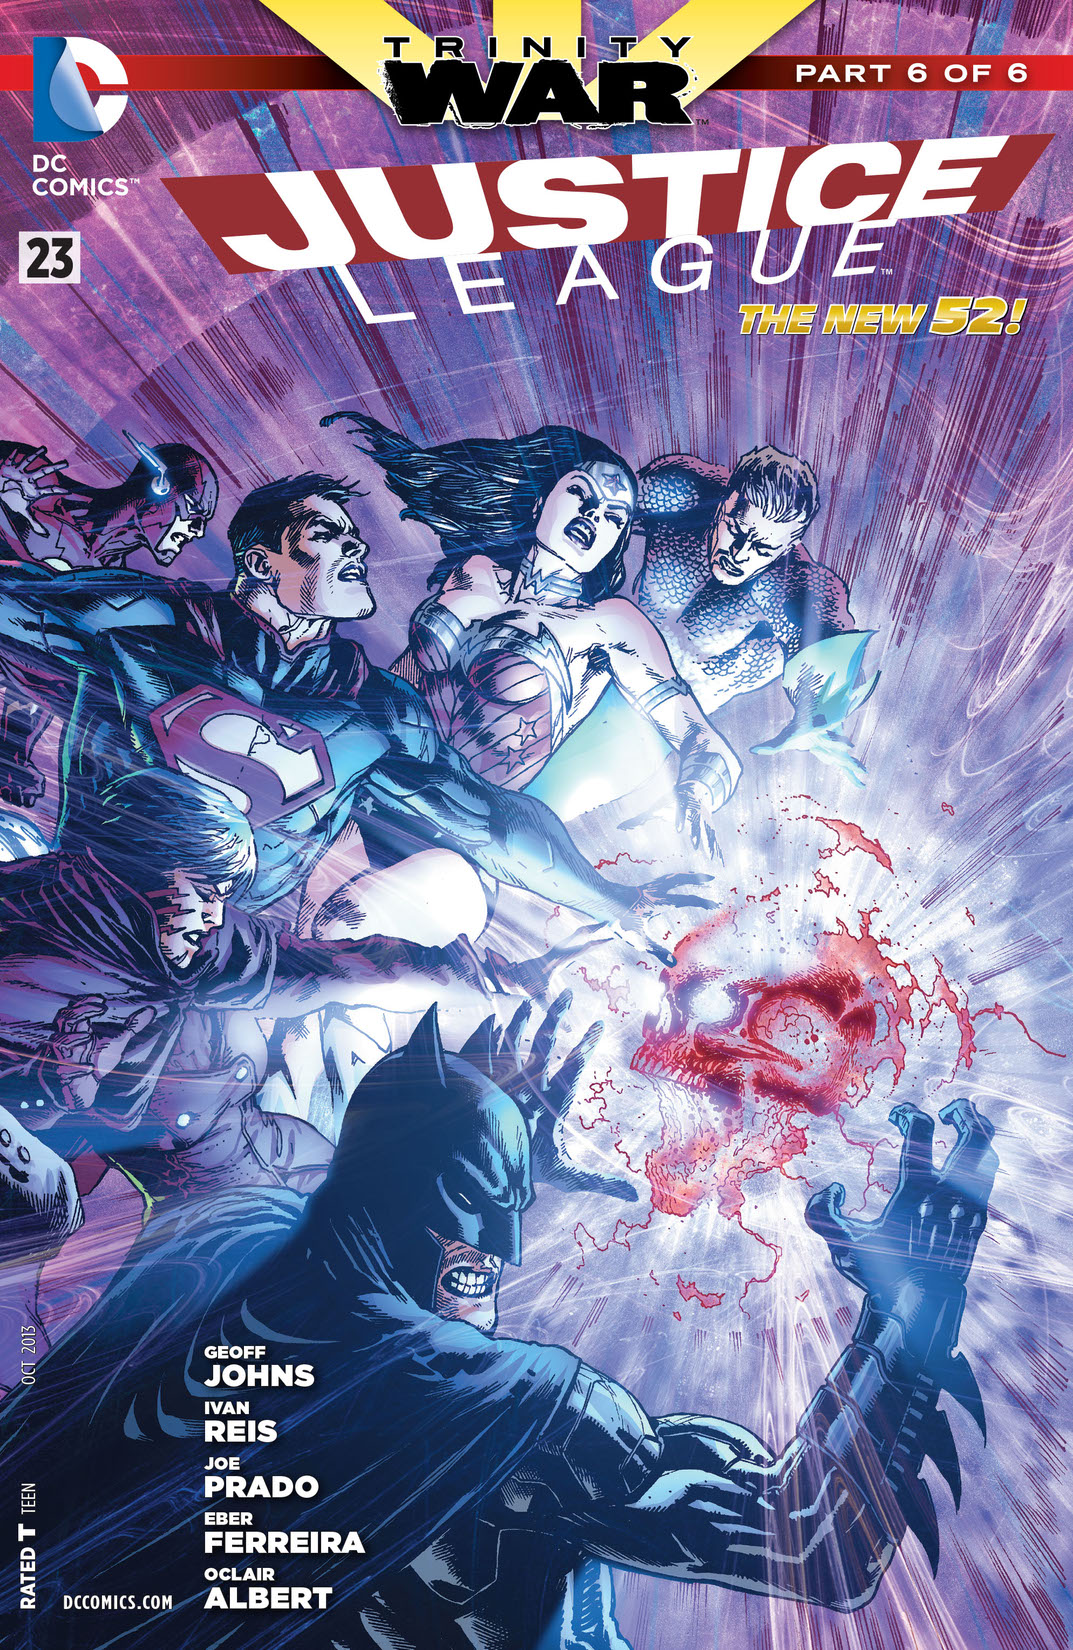 Justice League (2011-) #23 preview images